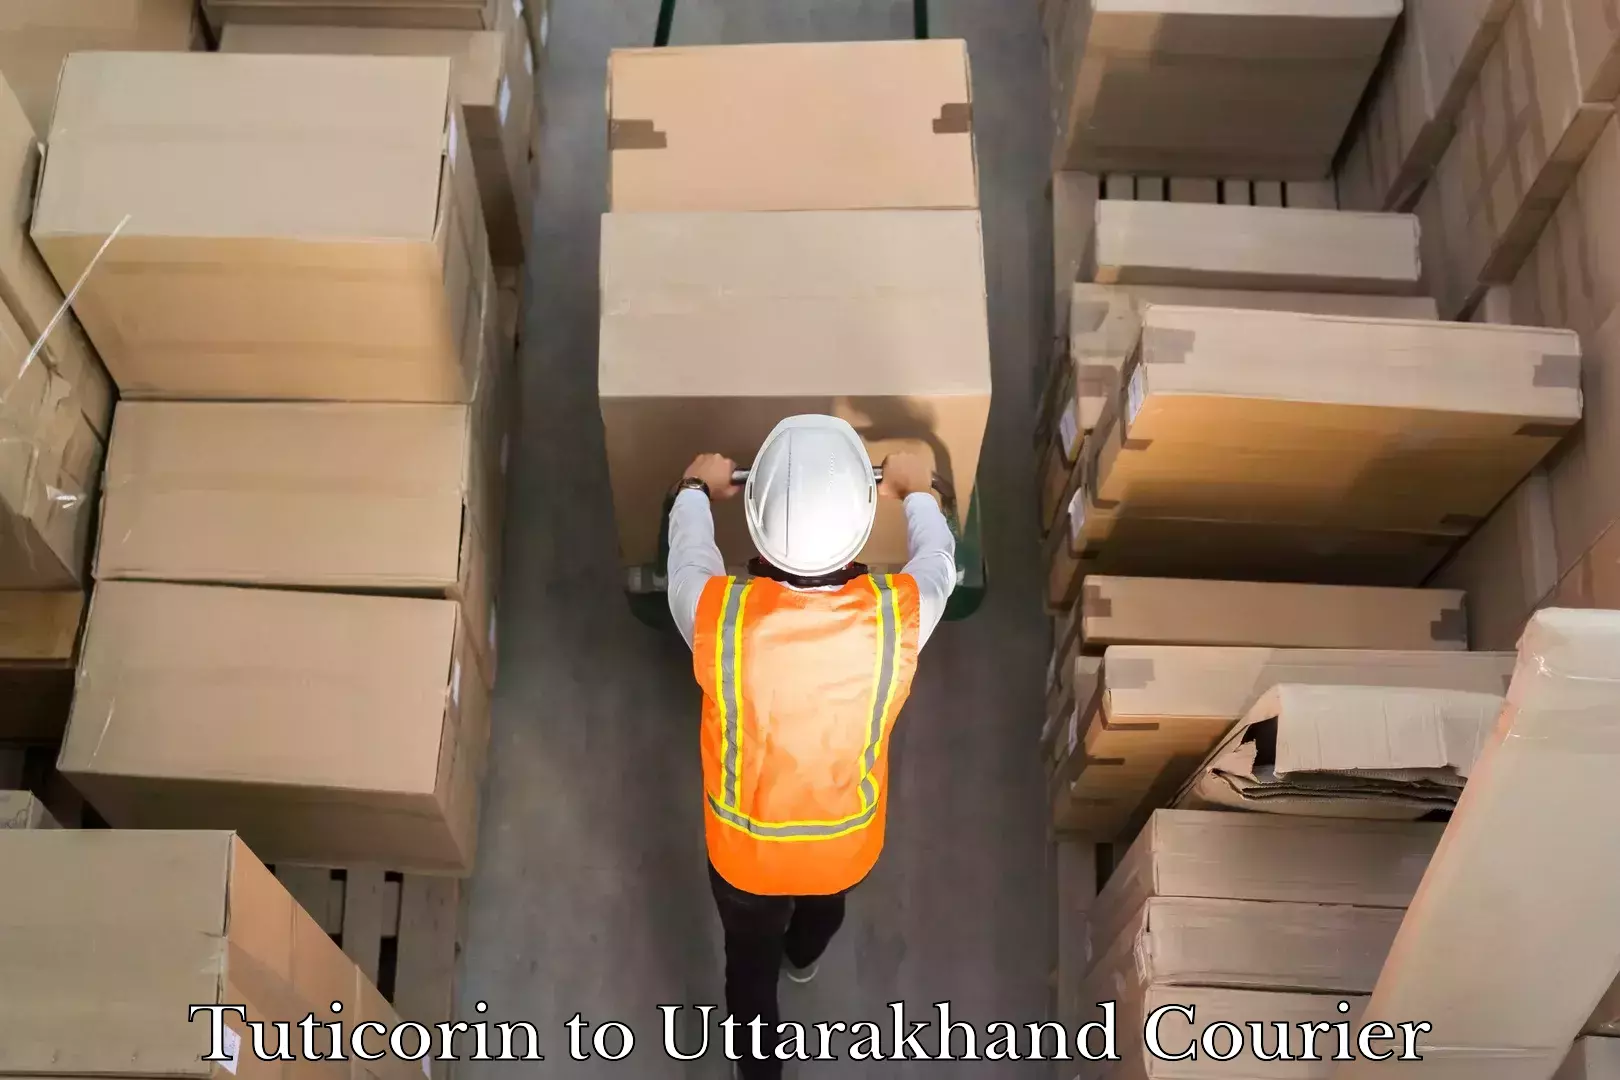 Cargo delivery service Tuticorin to Uttarakhand